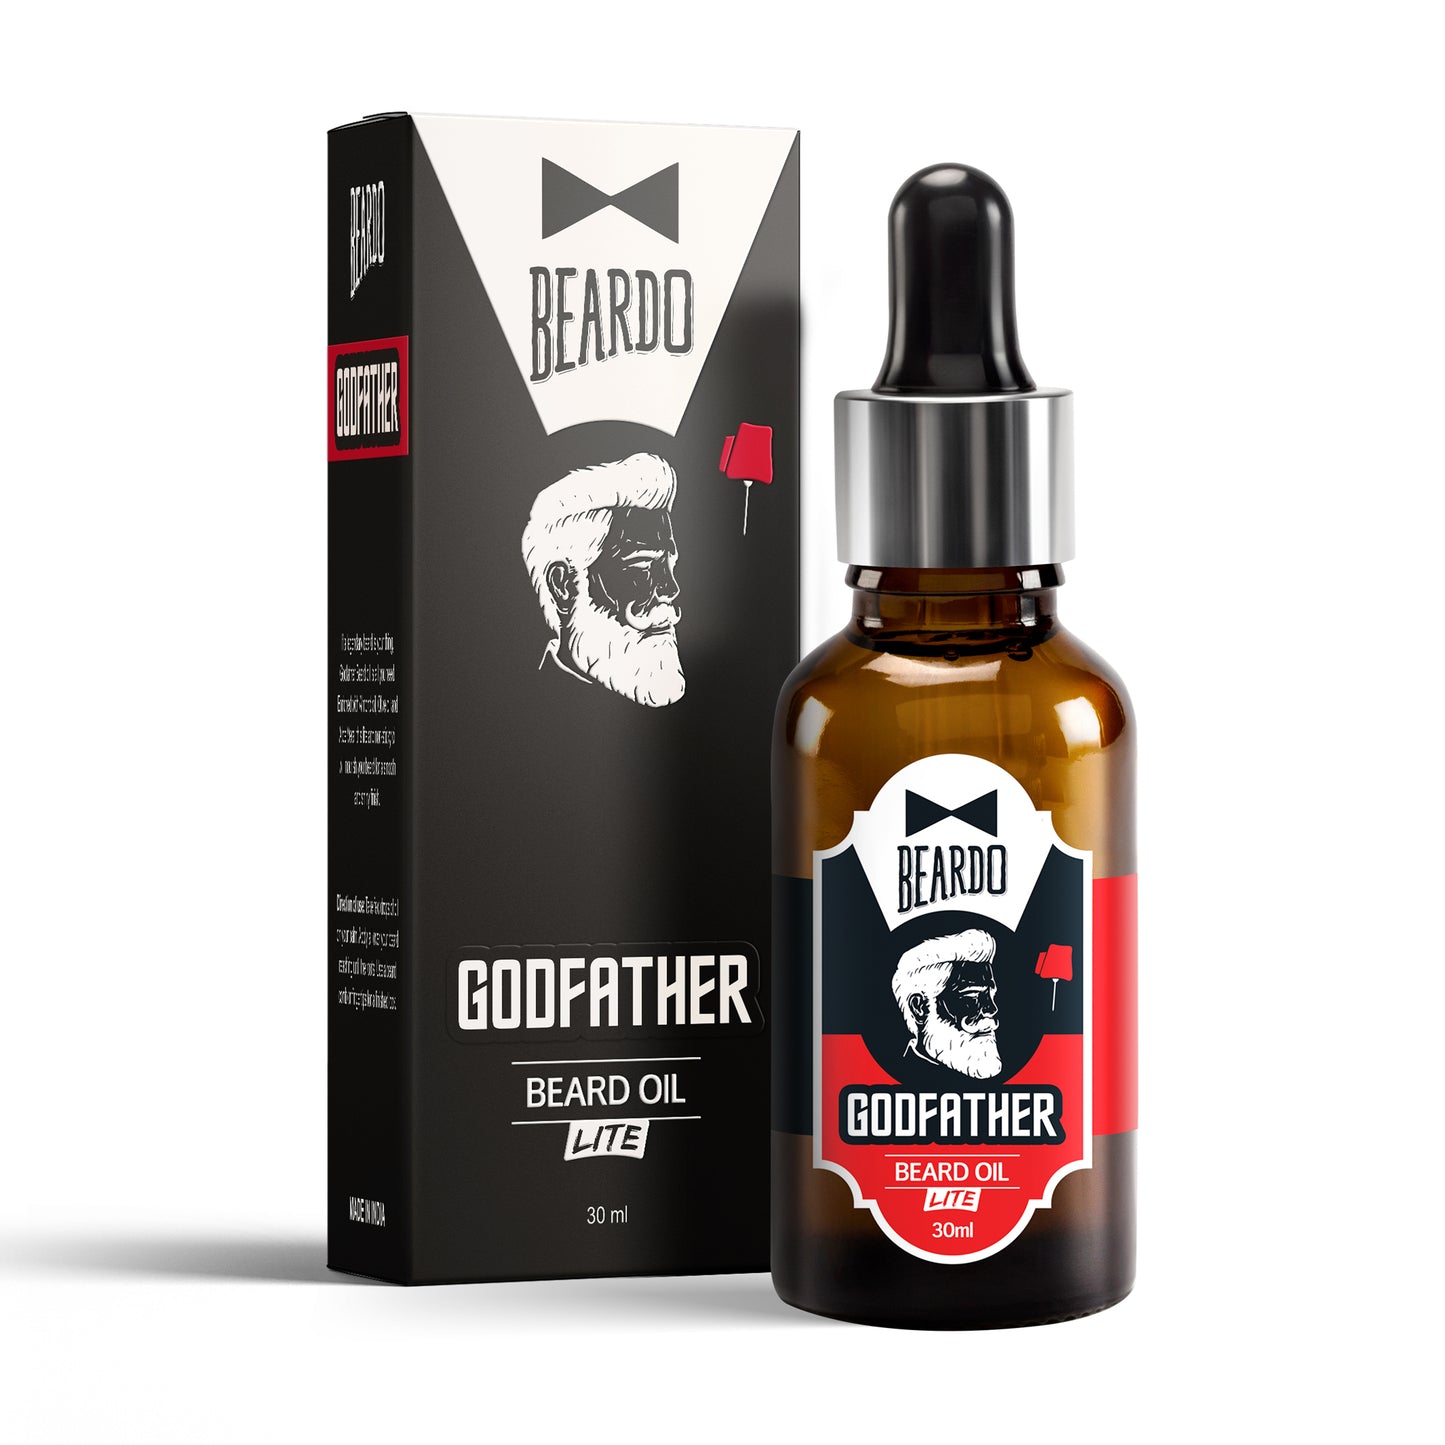 beardo godfather beard oil lite, beardo godfather beard oil, beard oil, best beard oil, best beard growth oil